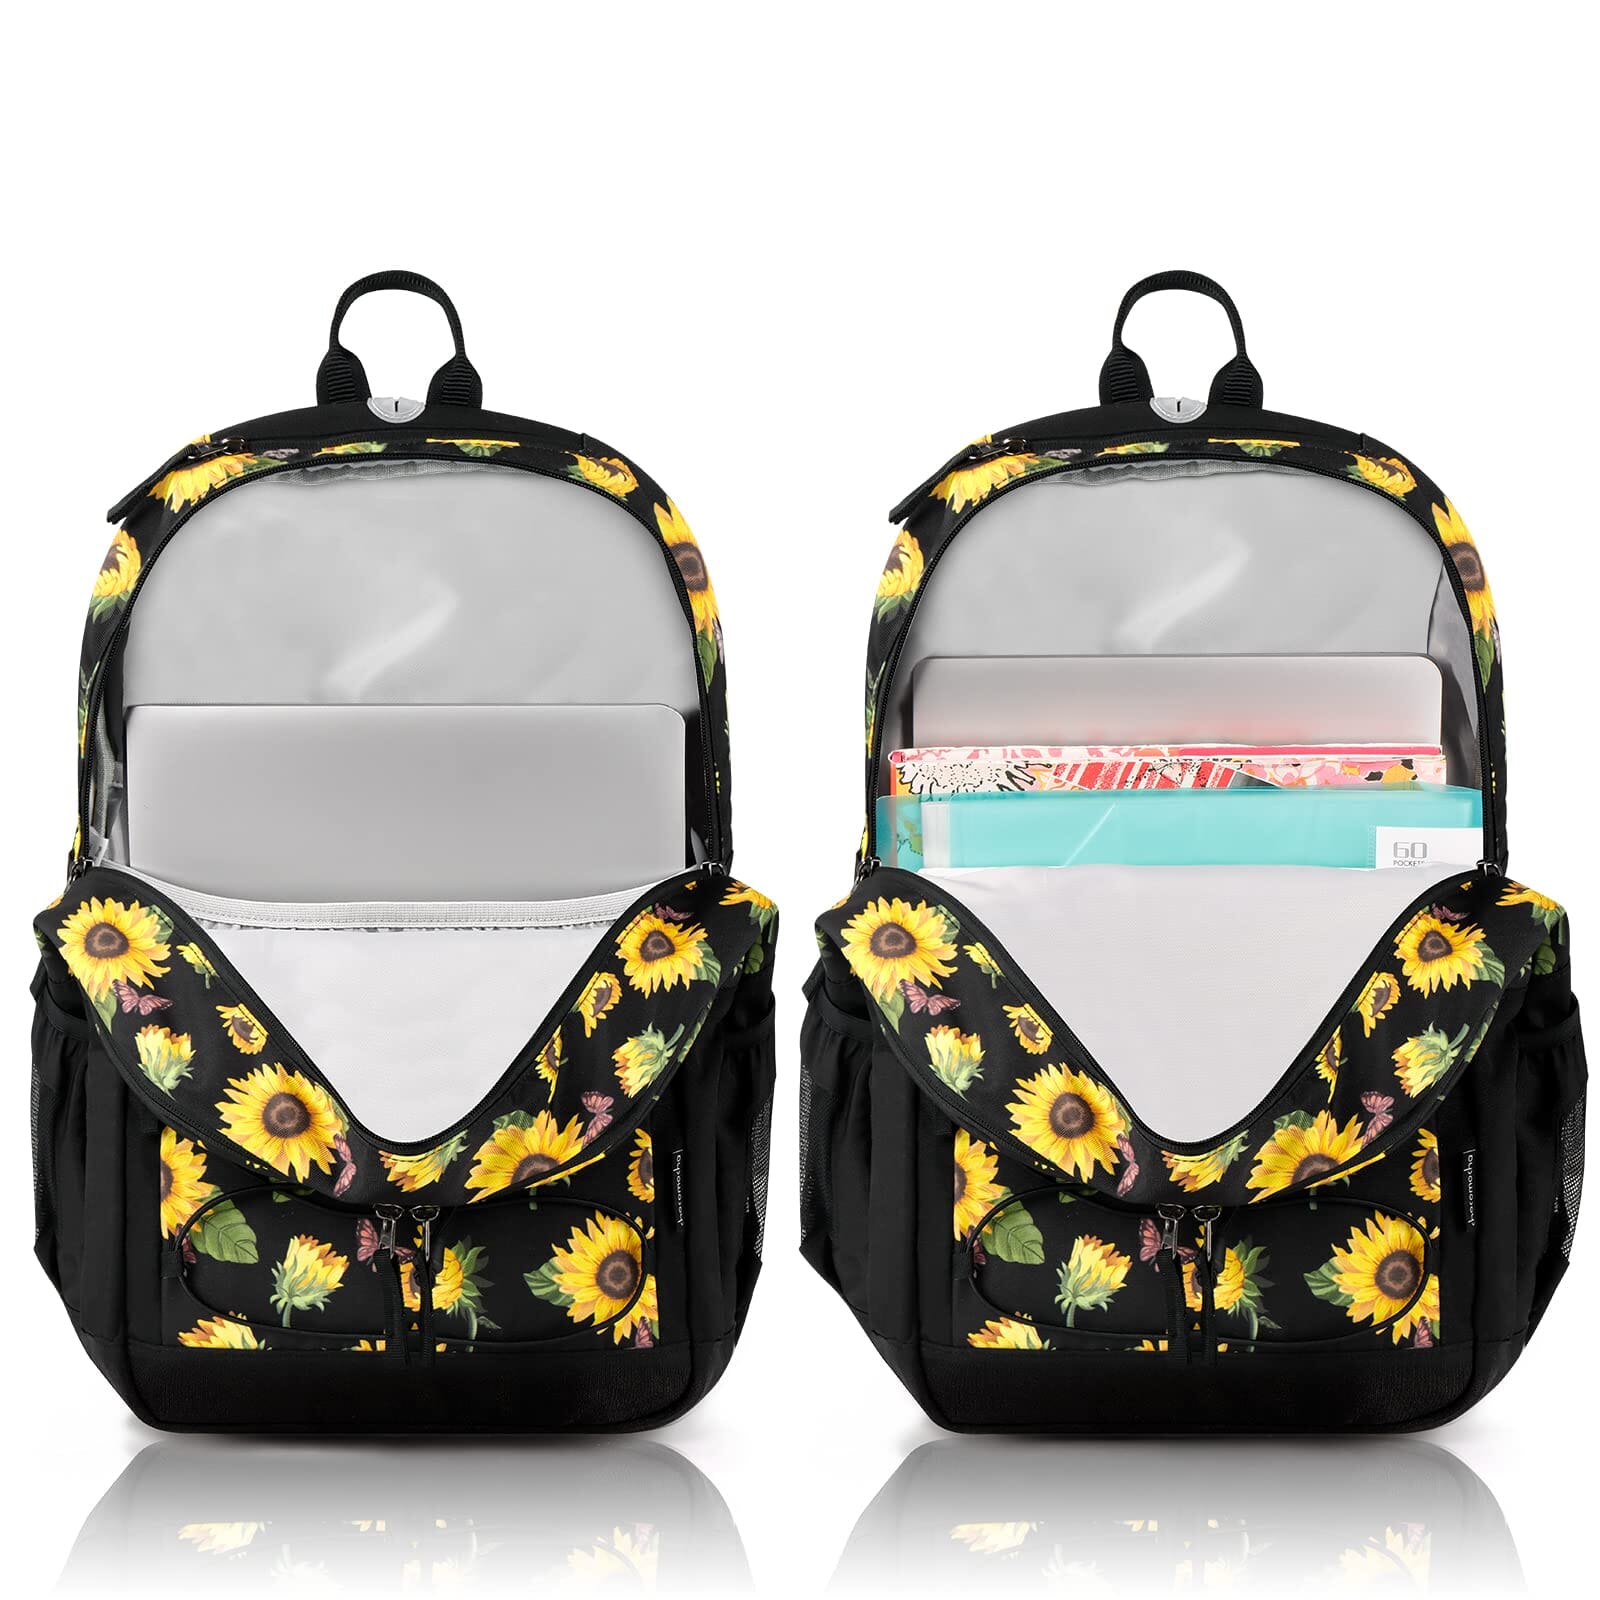 Choco Mocha Sunflower Backpack for Teen Girls, Travel School Backpack for Girls Middle School Large Bookbag 18 Inch, Black chocomochakids 